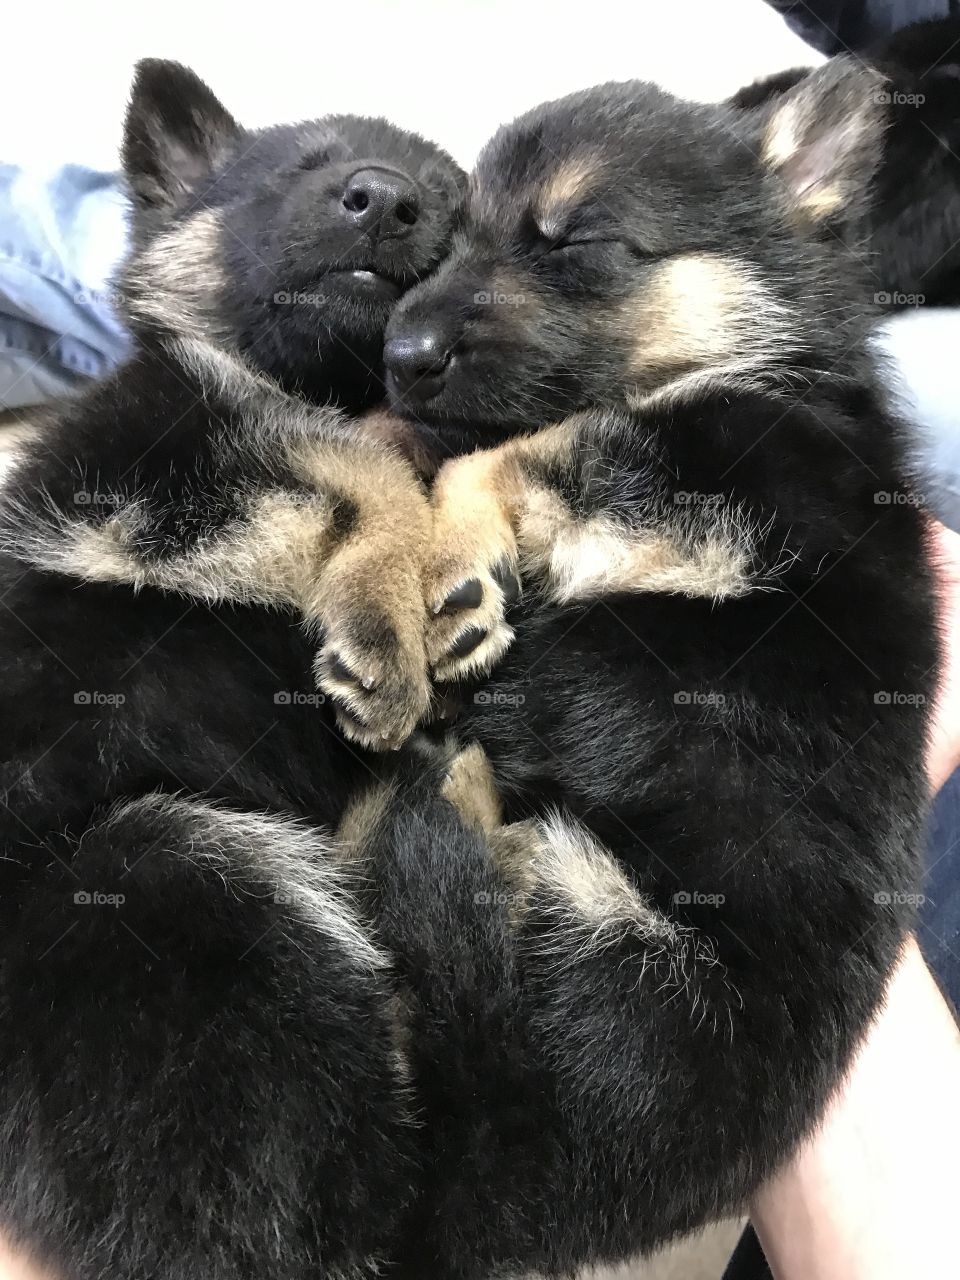 Sleepy Puppies